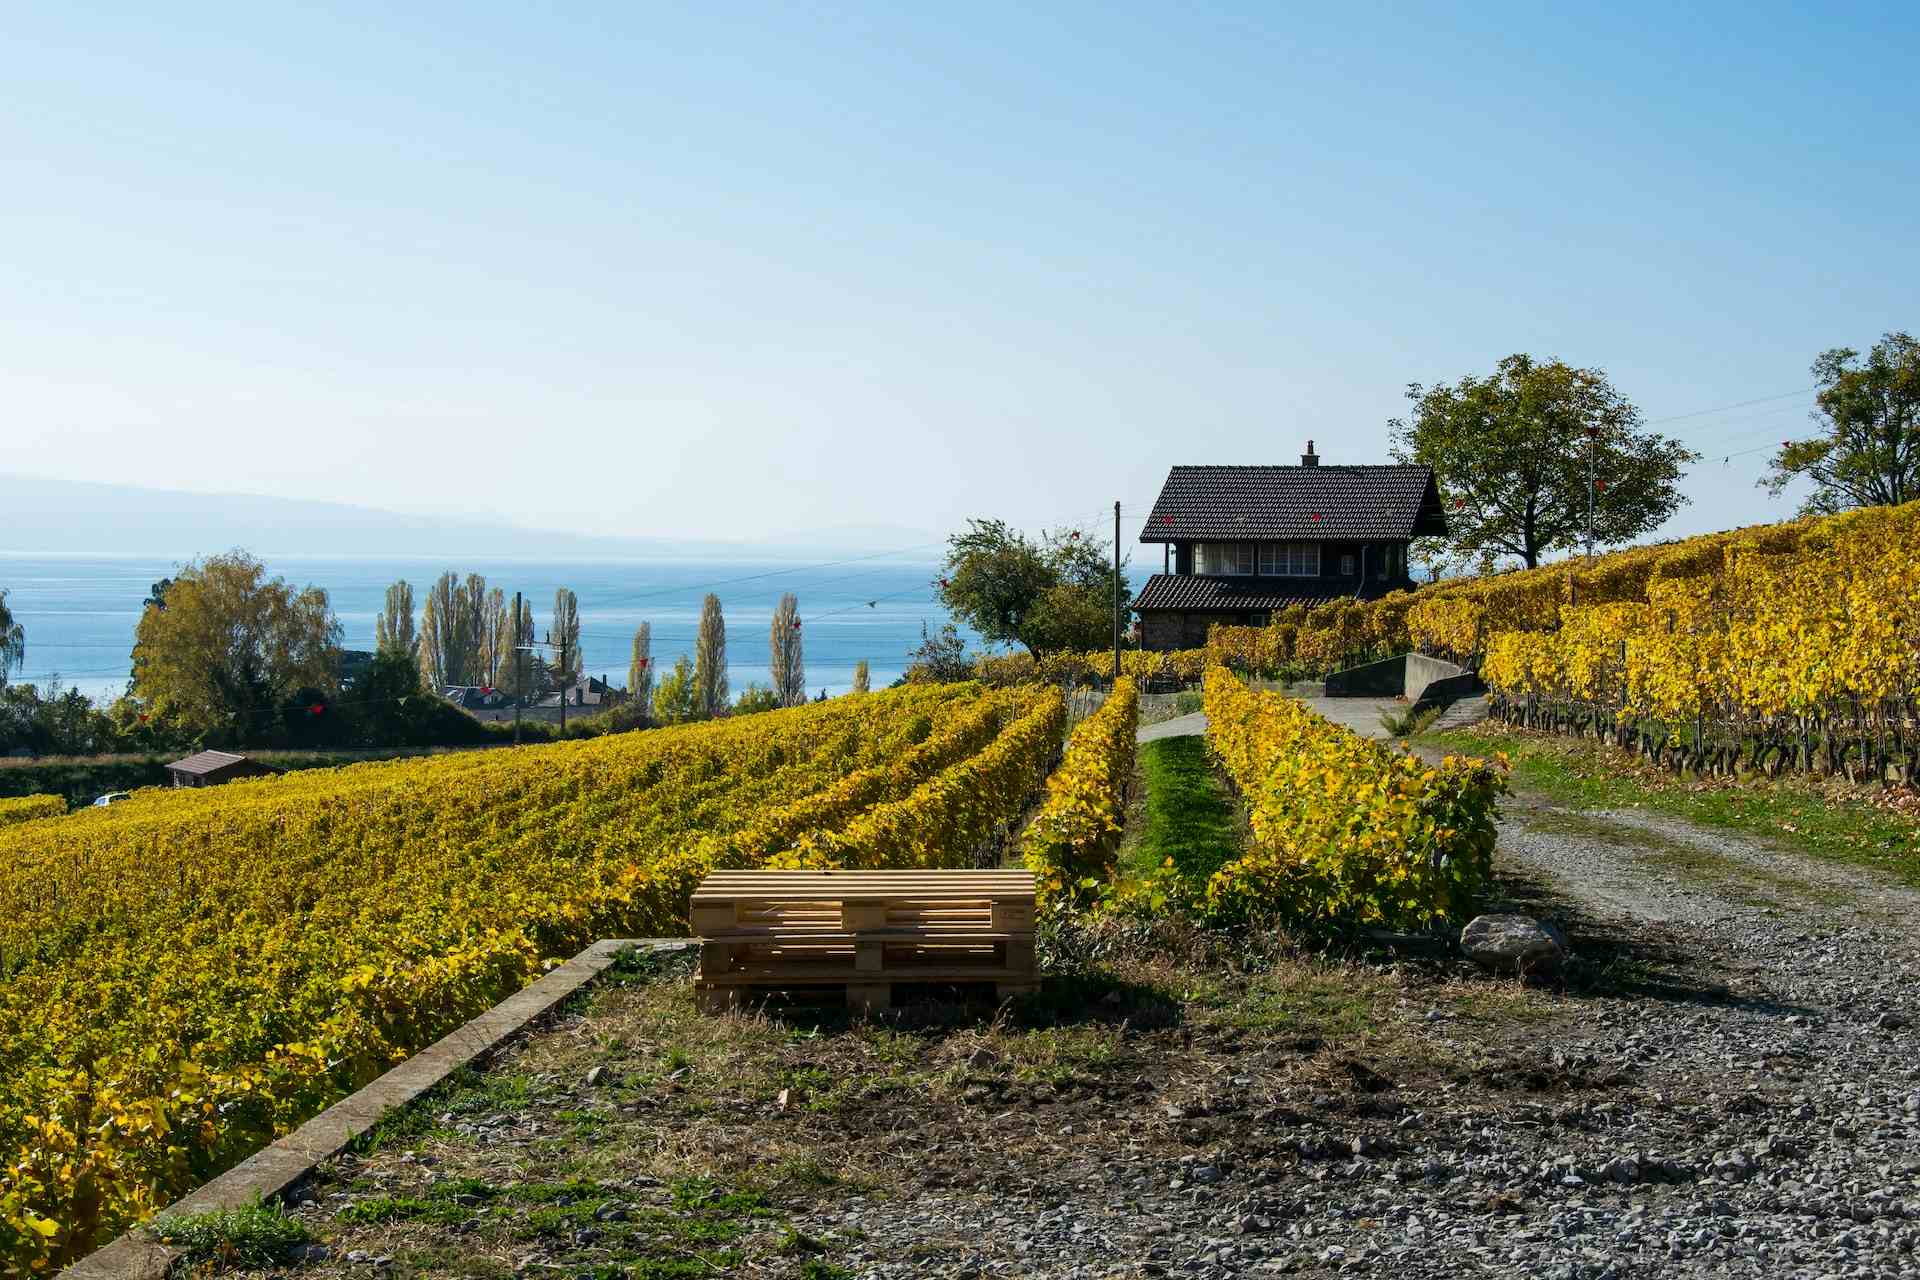 Les miels Brunet, producer in La Sarraz canton of Vaud in Switzerland